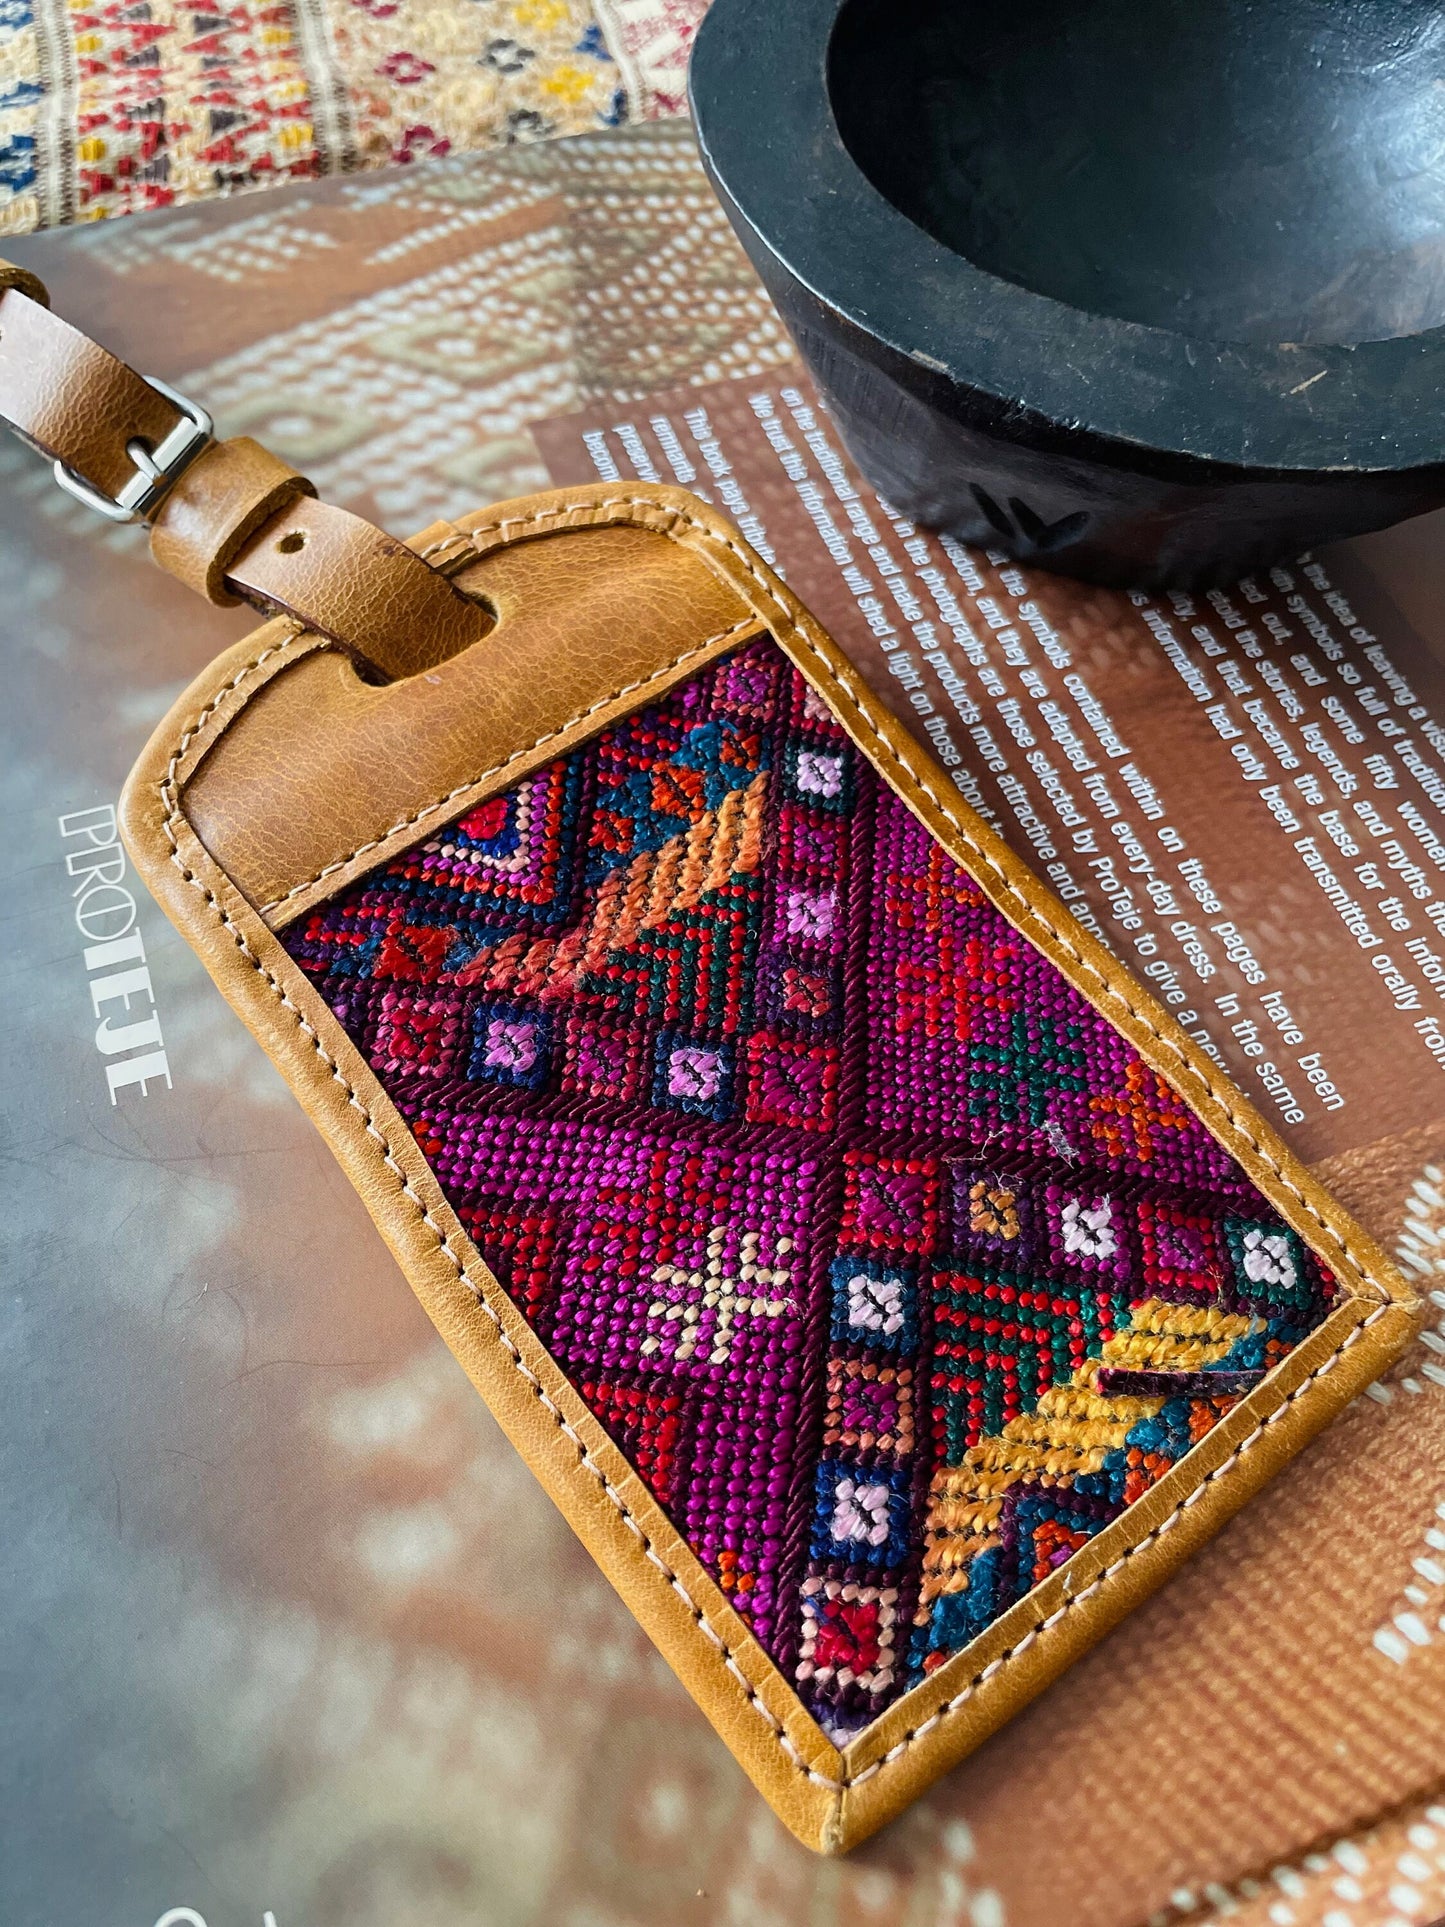 Guatemalan Handmade Leather/Huipil Luggage Tags